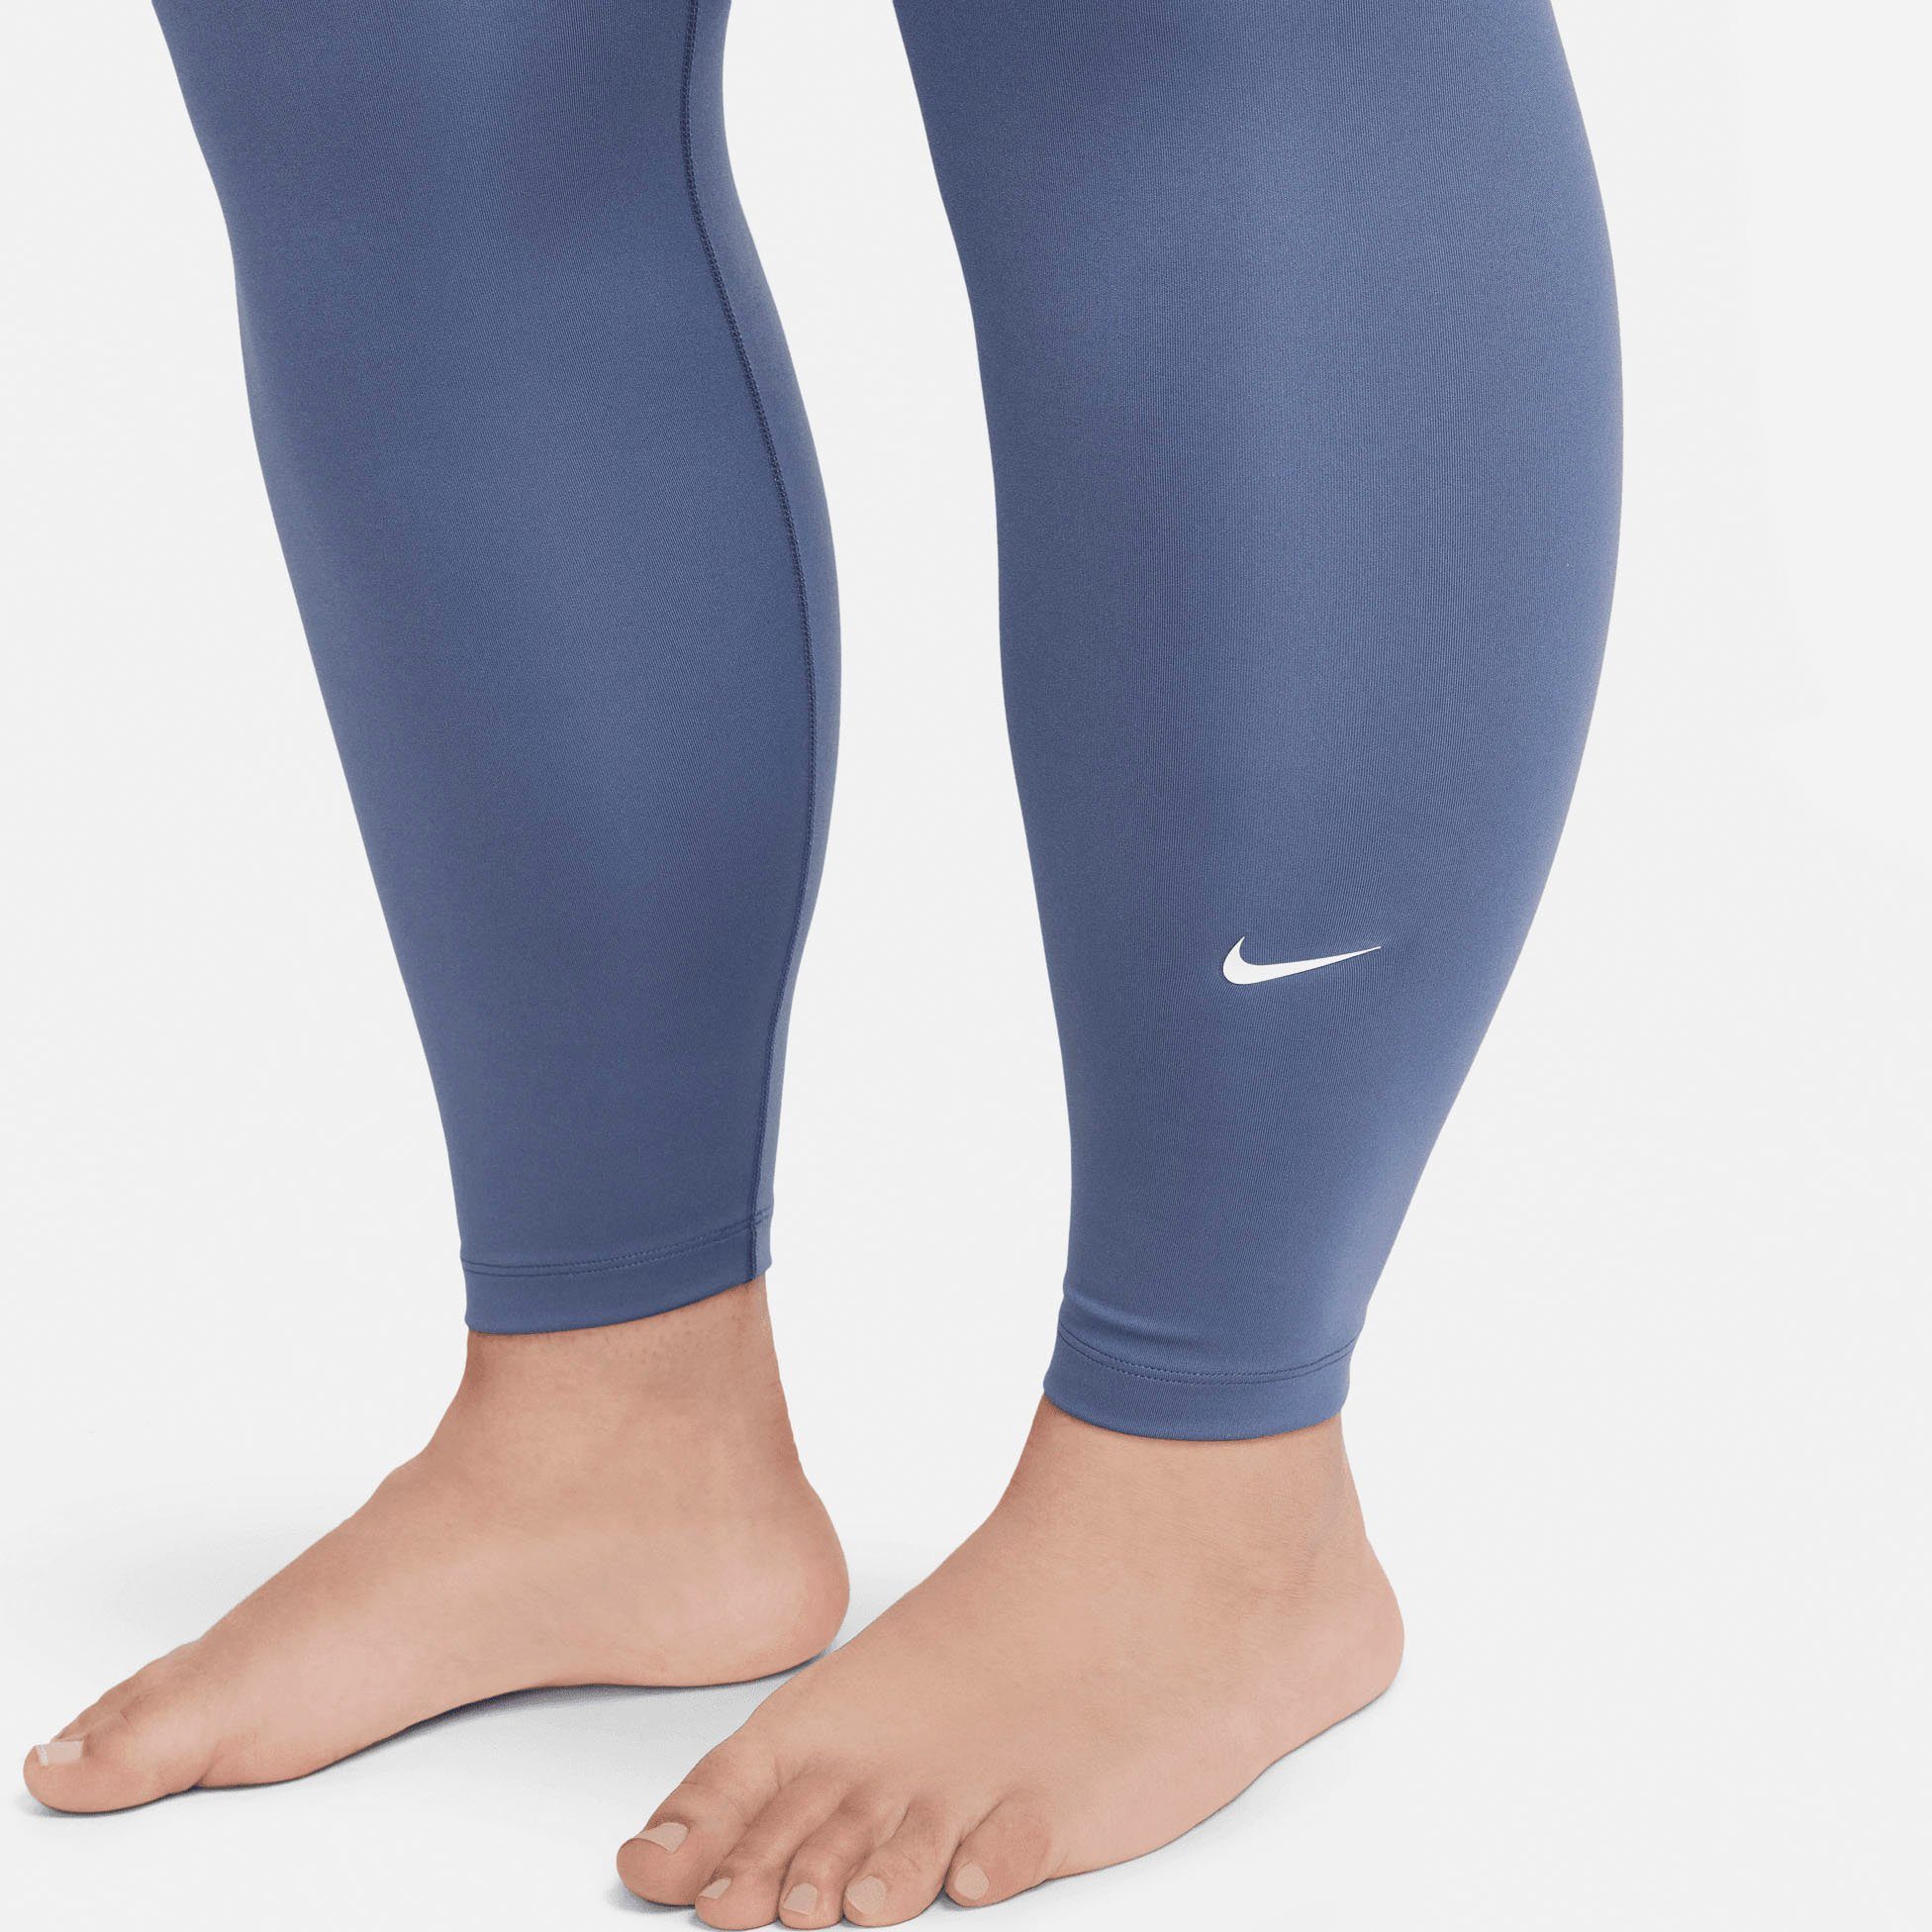 Nike Leggings Mid-Rise (Plus One blau Size) Women's Trainingstights